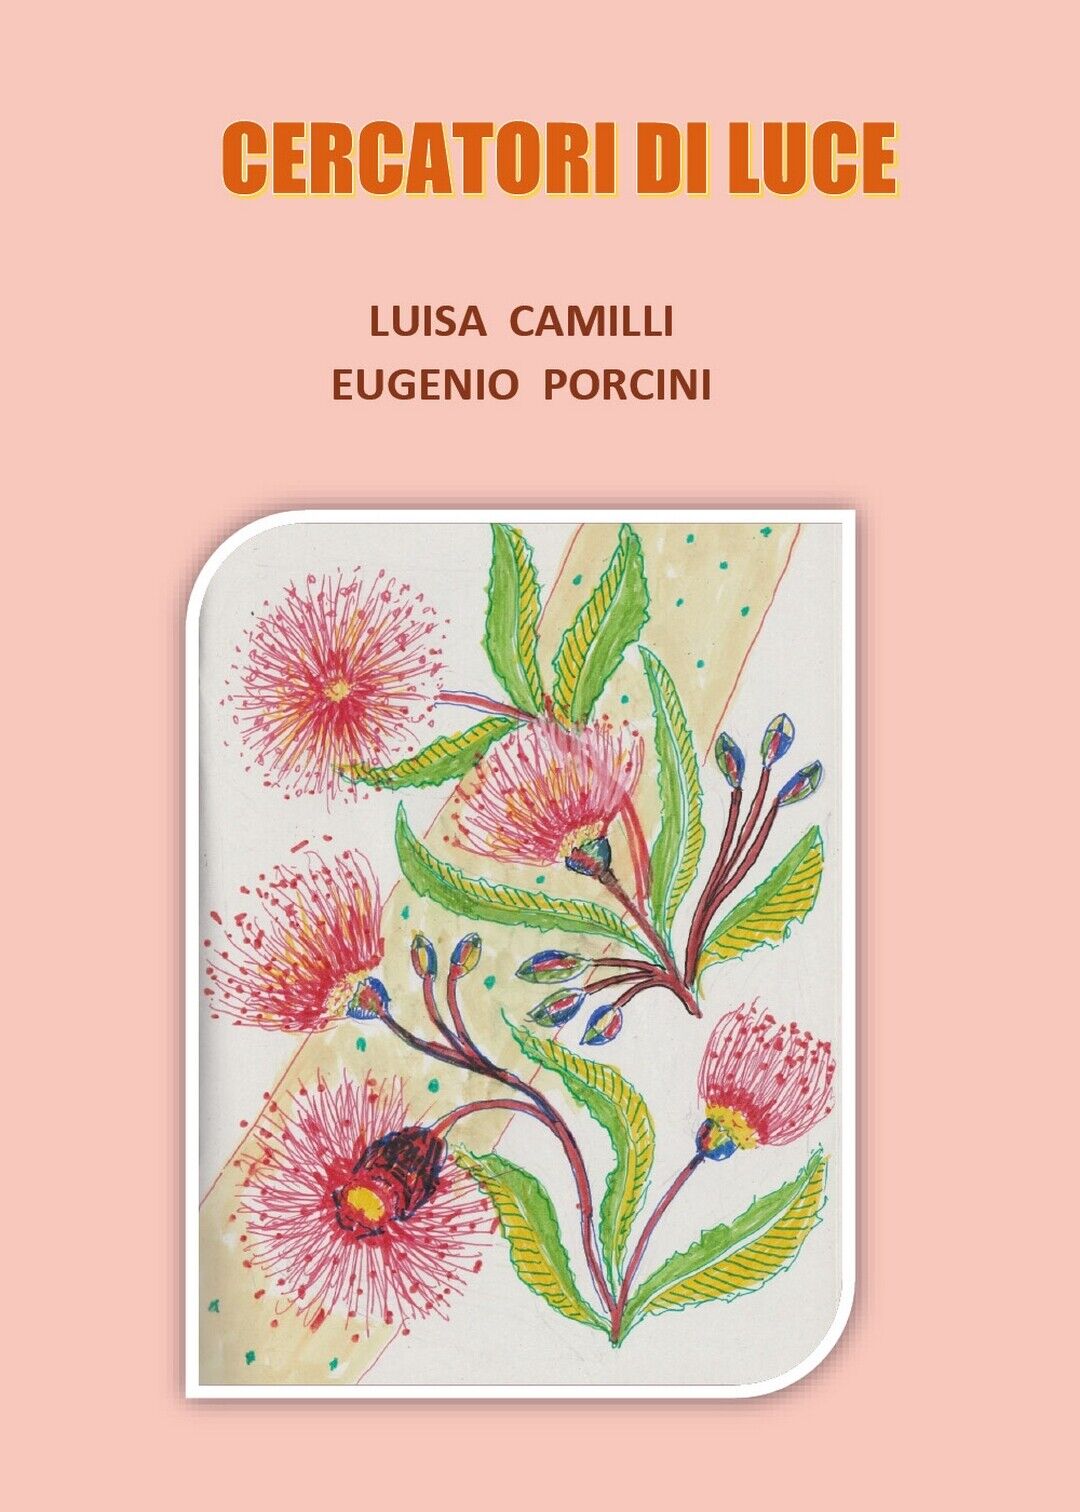 Cercatori di Luce  di Luisa Camilli, Eugenio Porcini,  2020,  Youcanprint